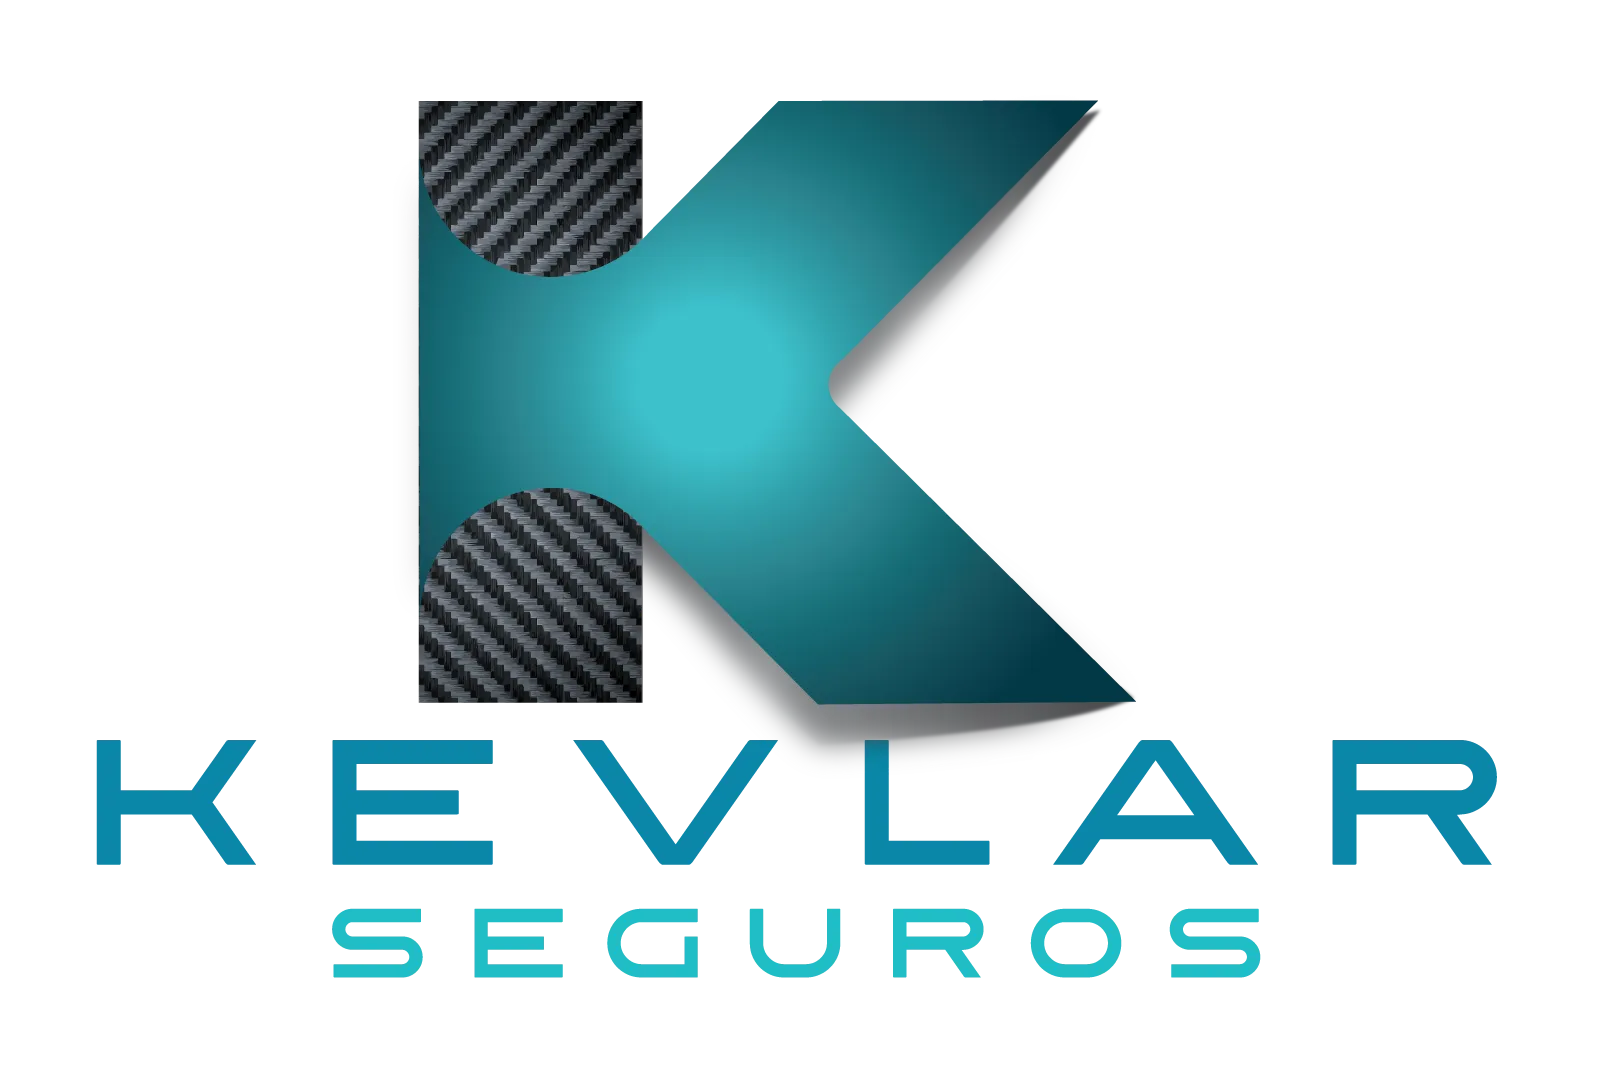 Kevlar Logo